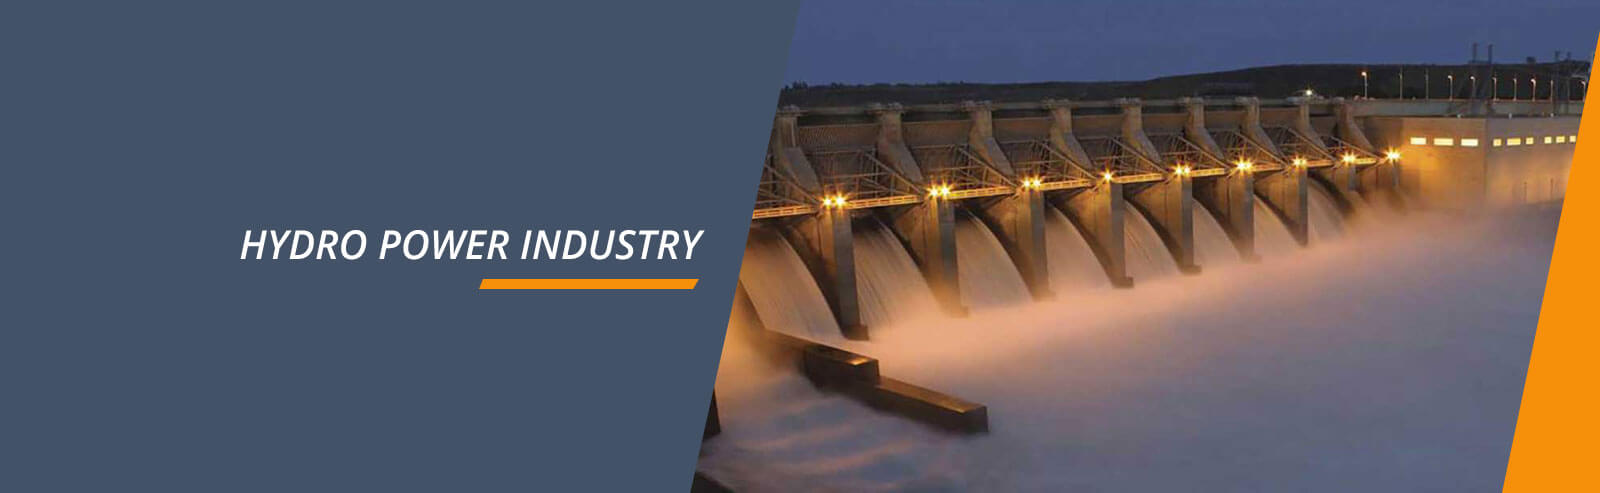 Oilseals-Hydro Power Industry